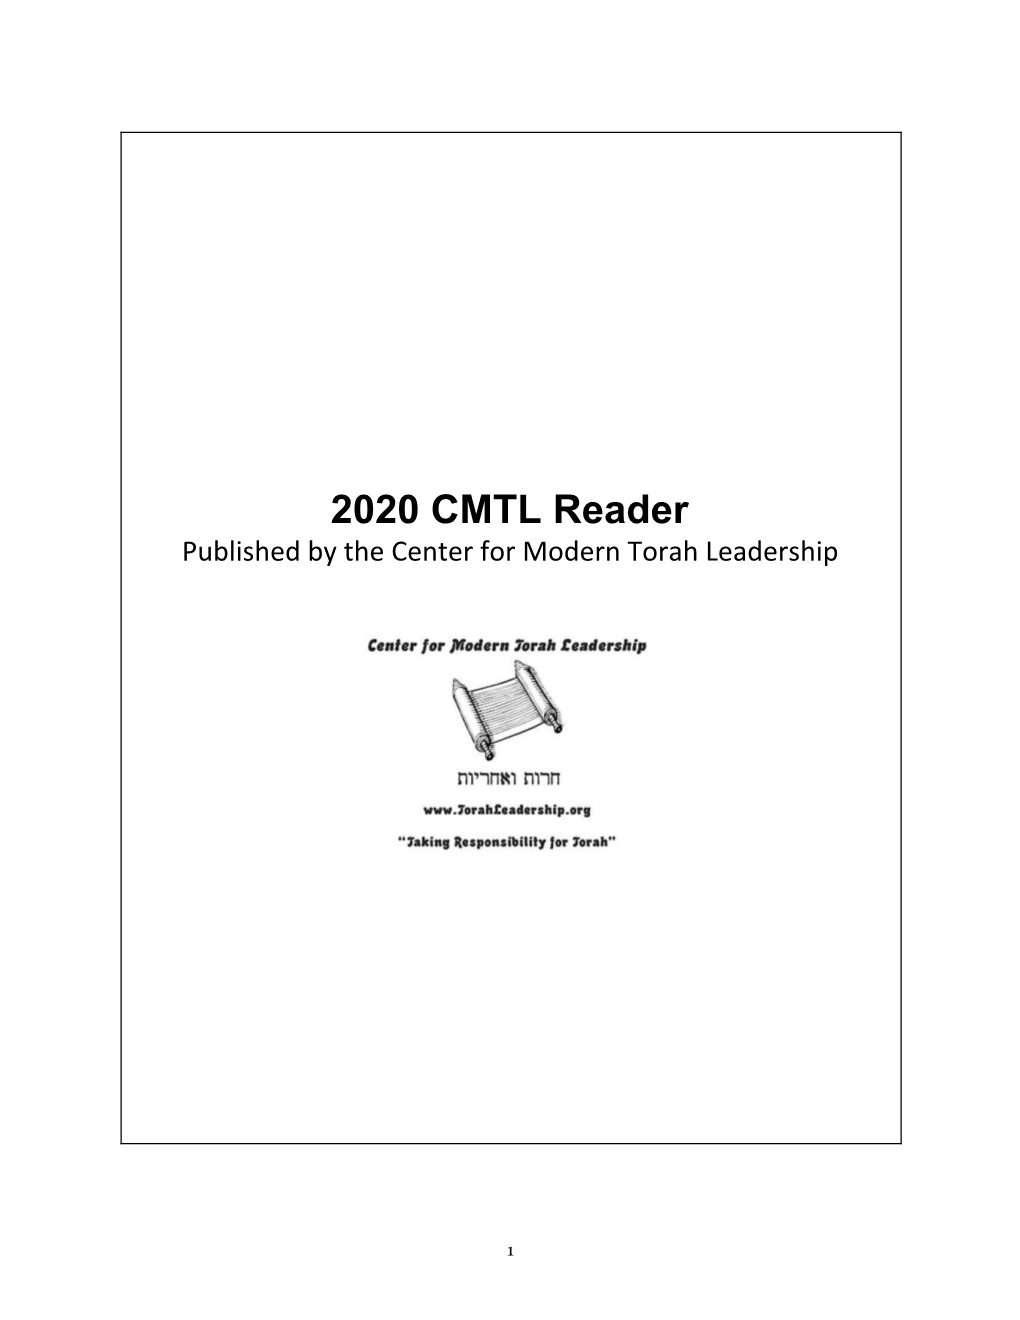 2020 CMTL Reader Published by the Center for Modern Torah Leadership